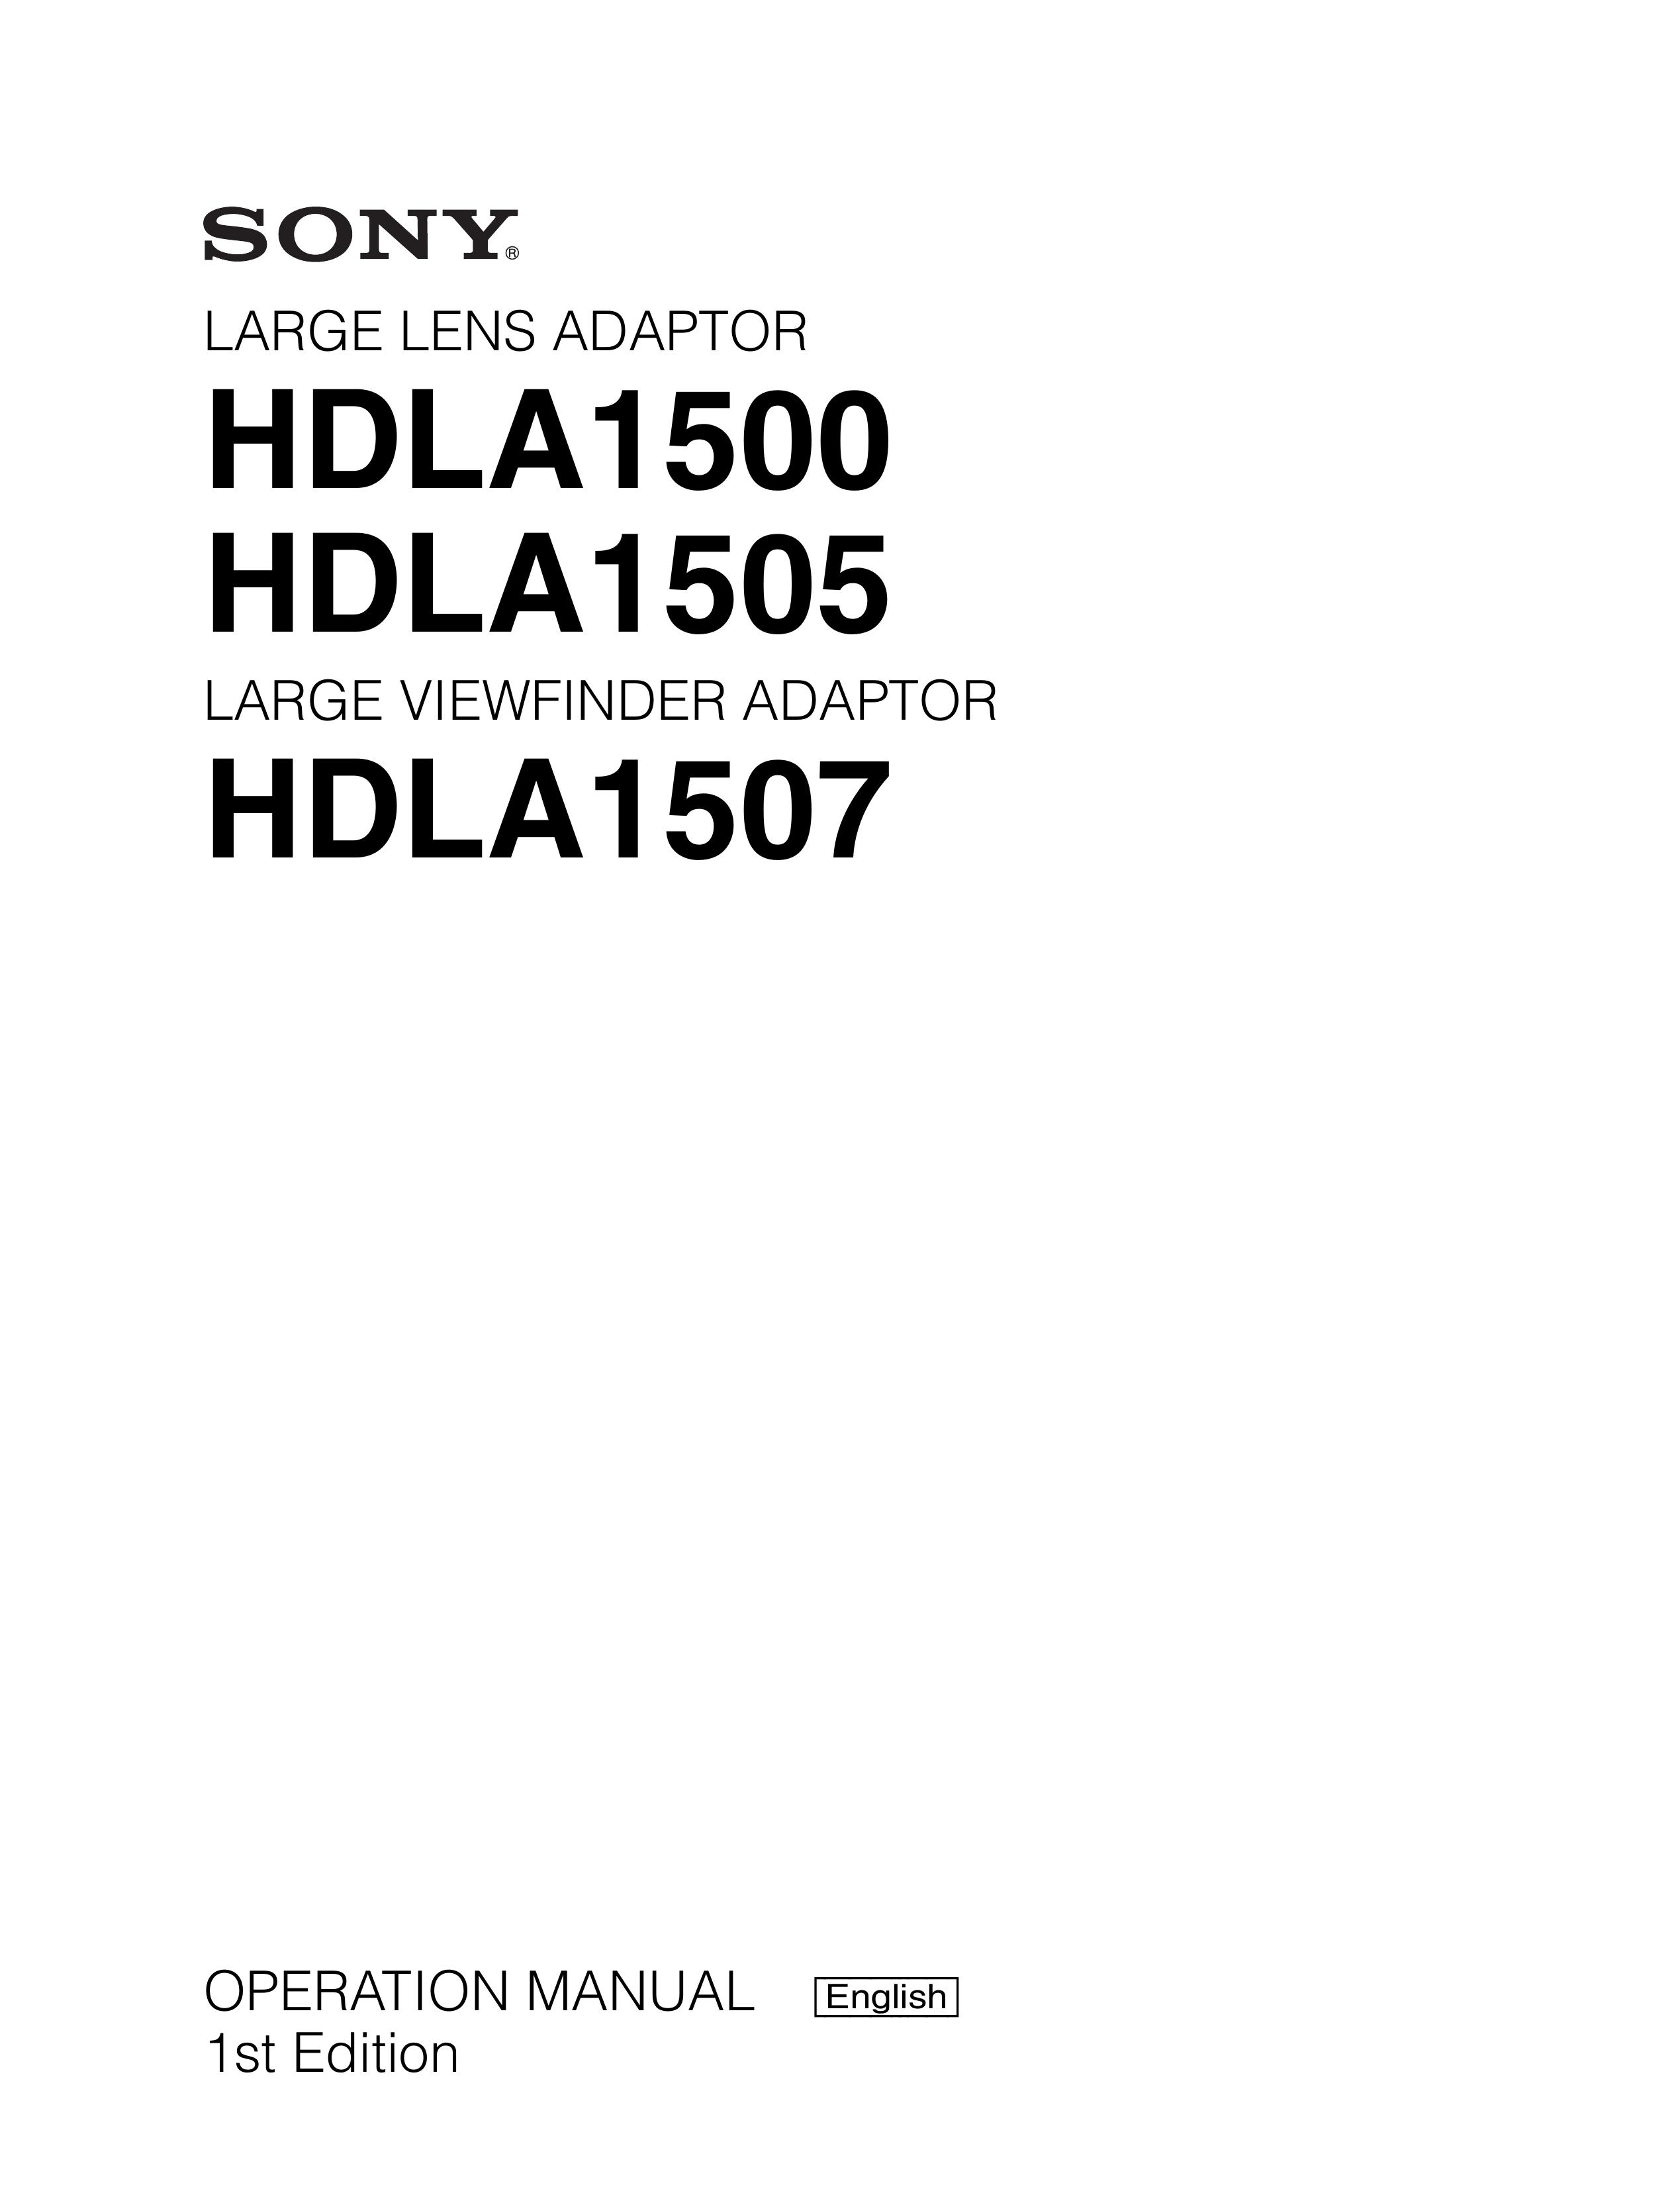 Sony HDLA1500 Microscope & Magnifier User Manual